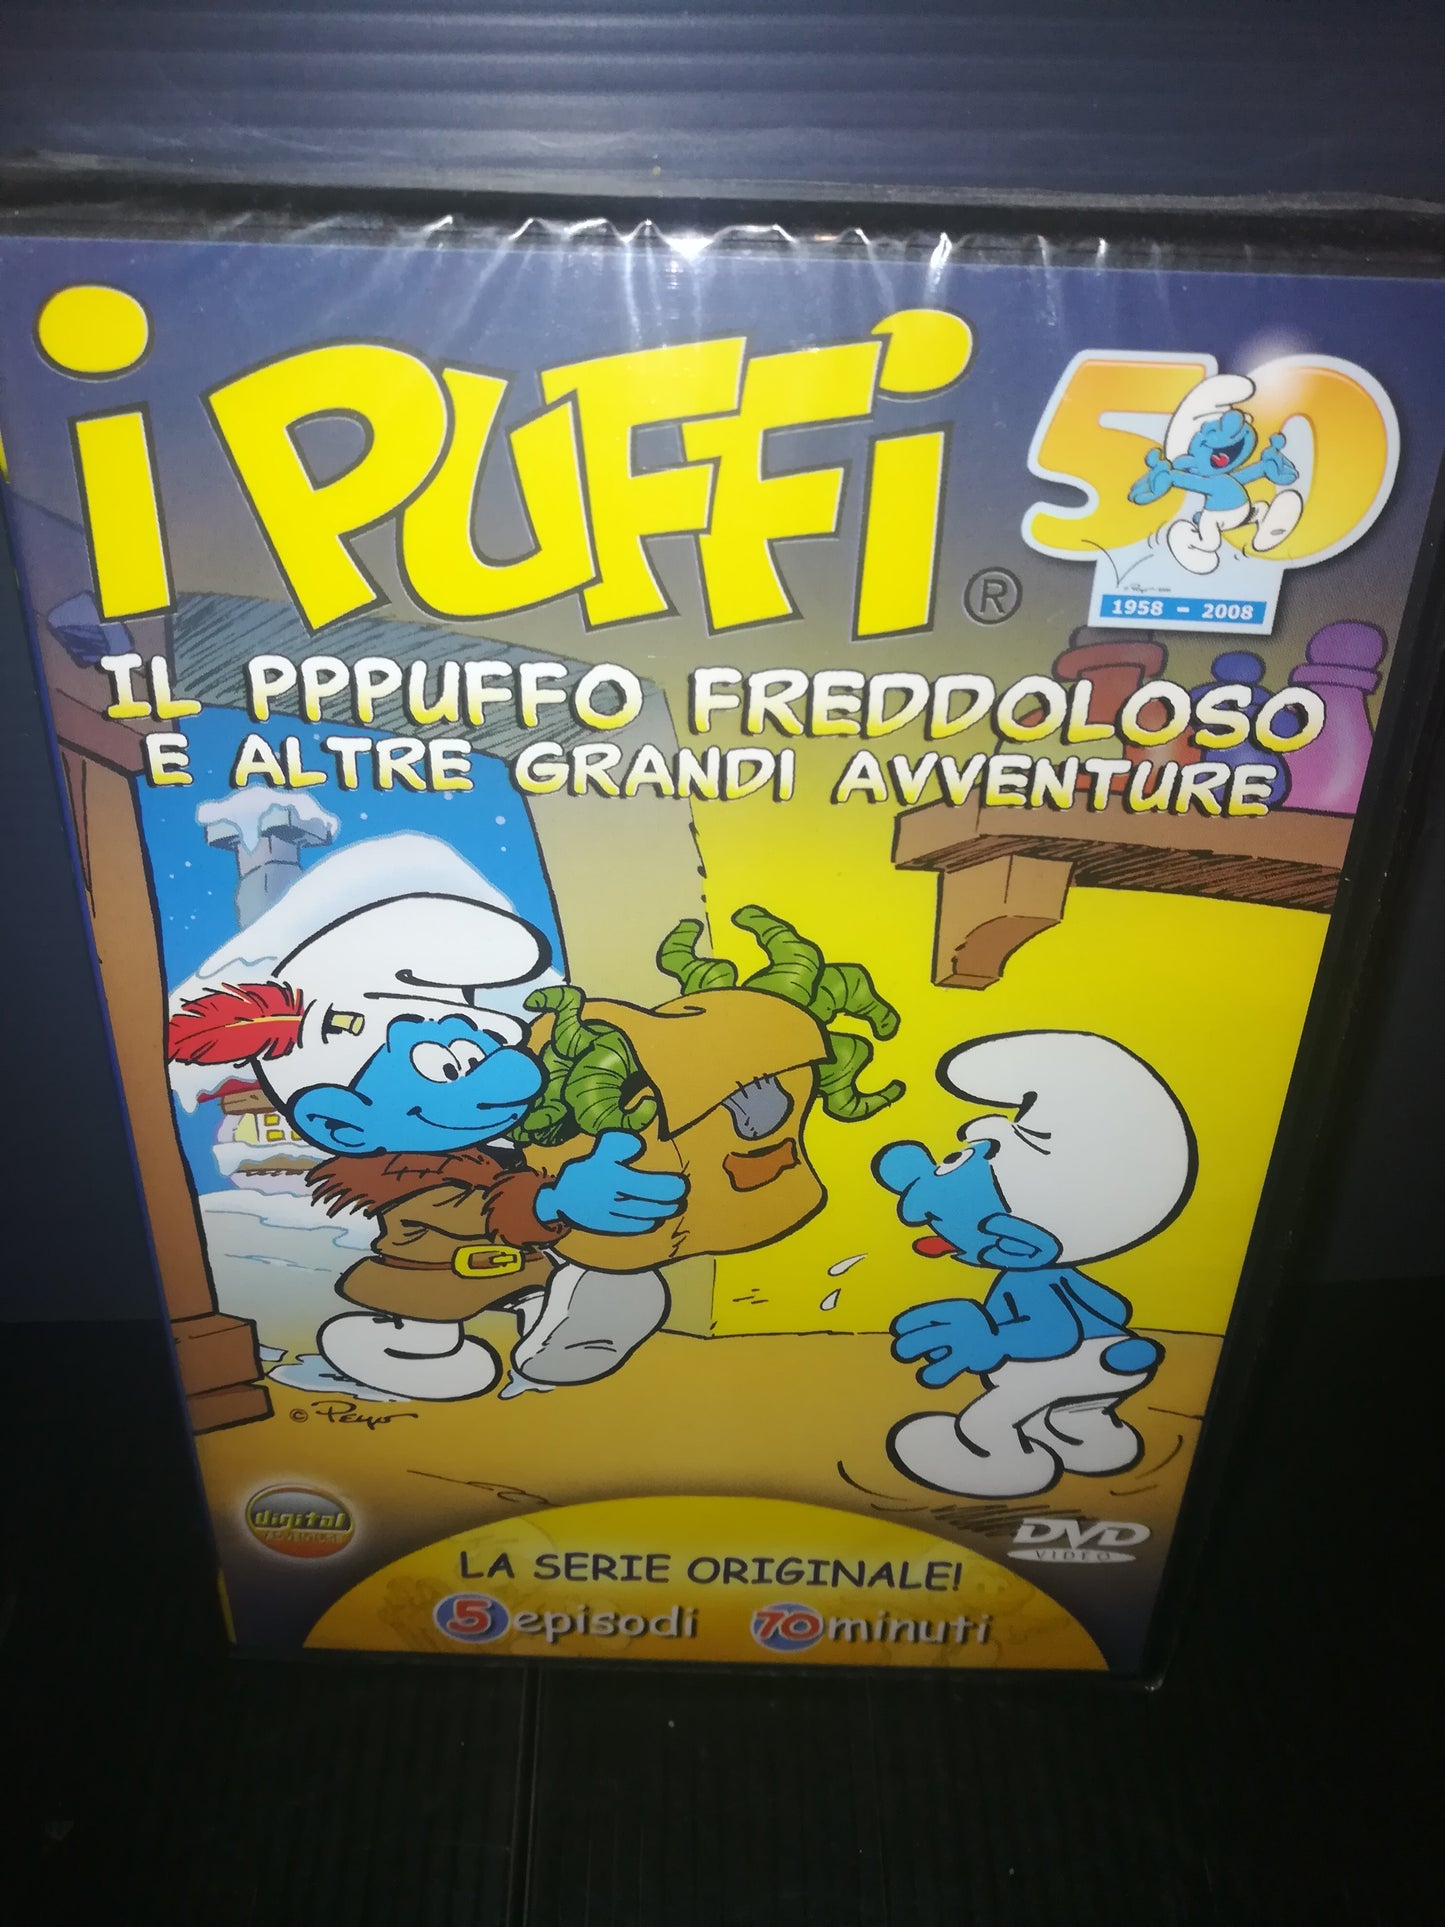 "Il Pppuffo freddoloso" I Puffi DVD